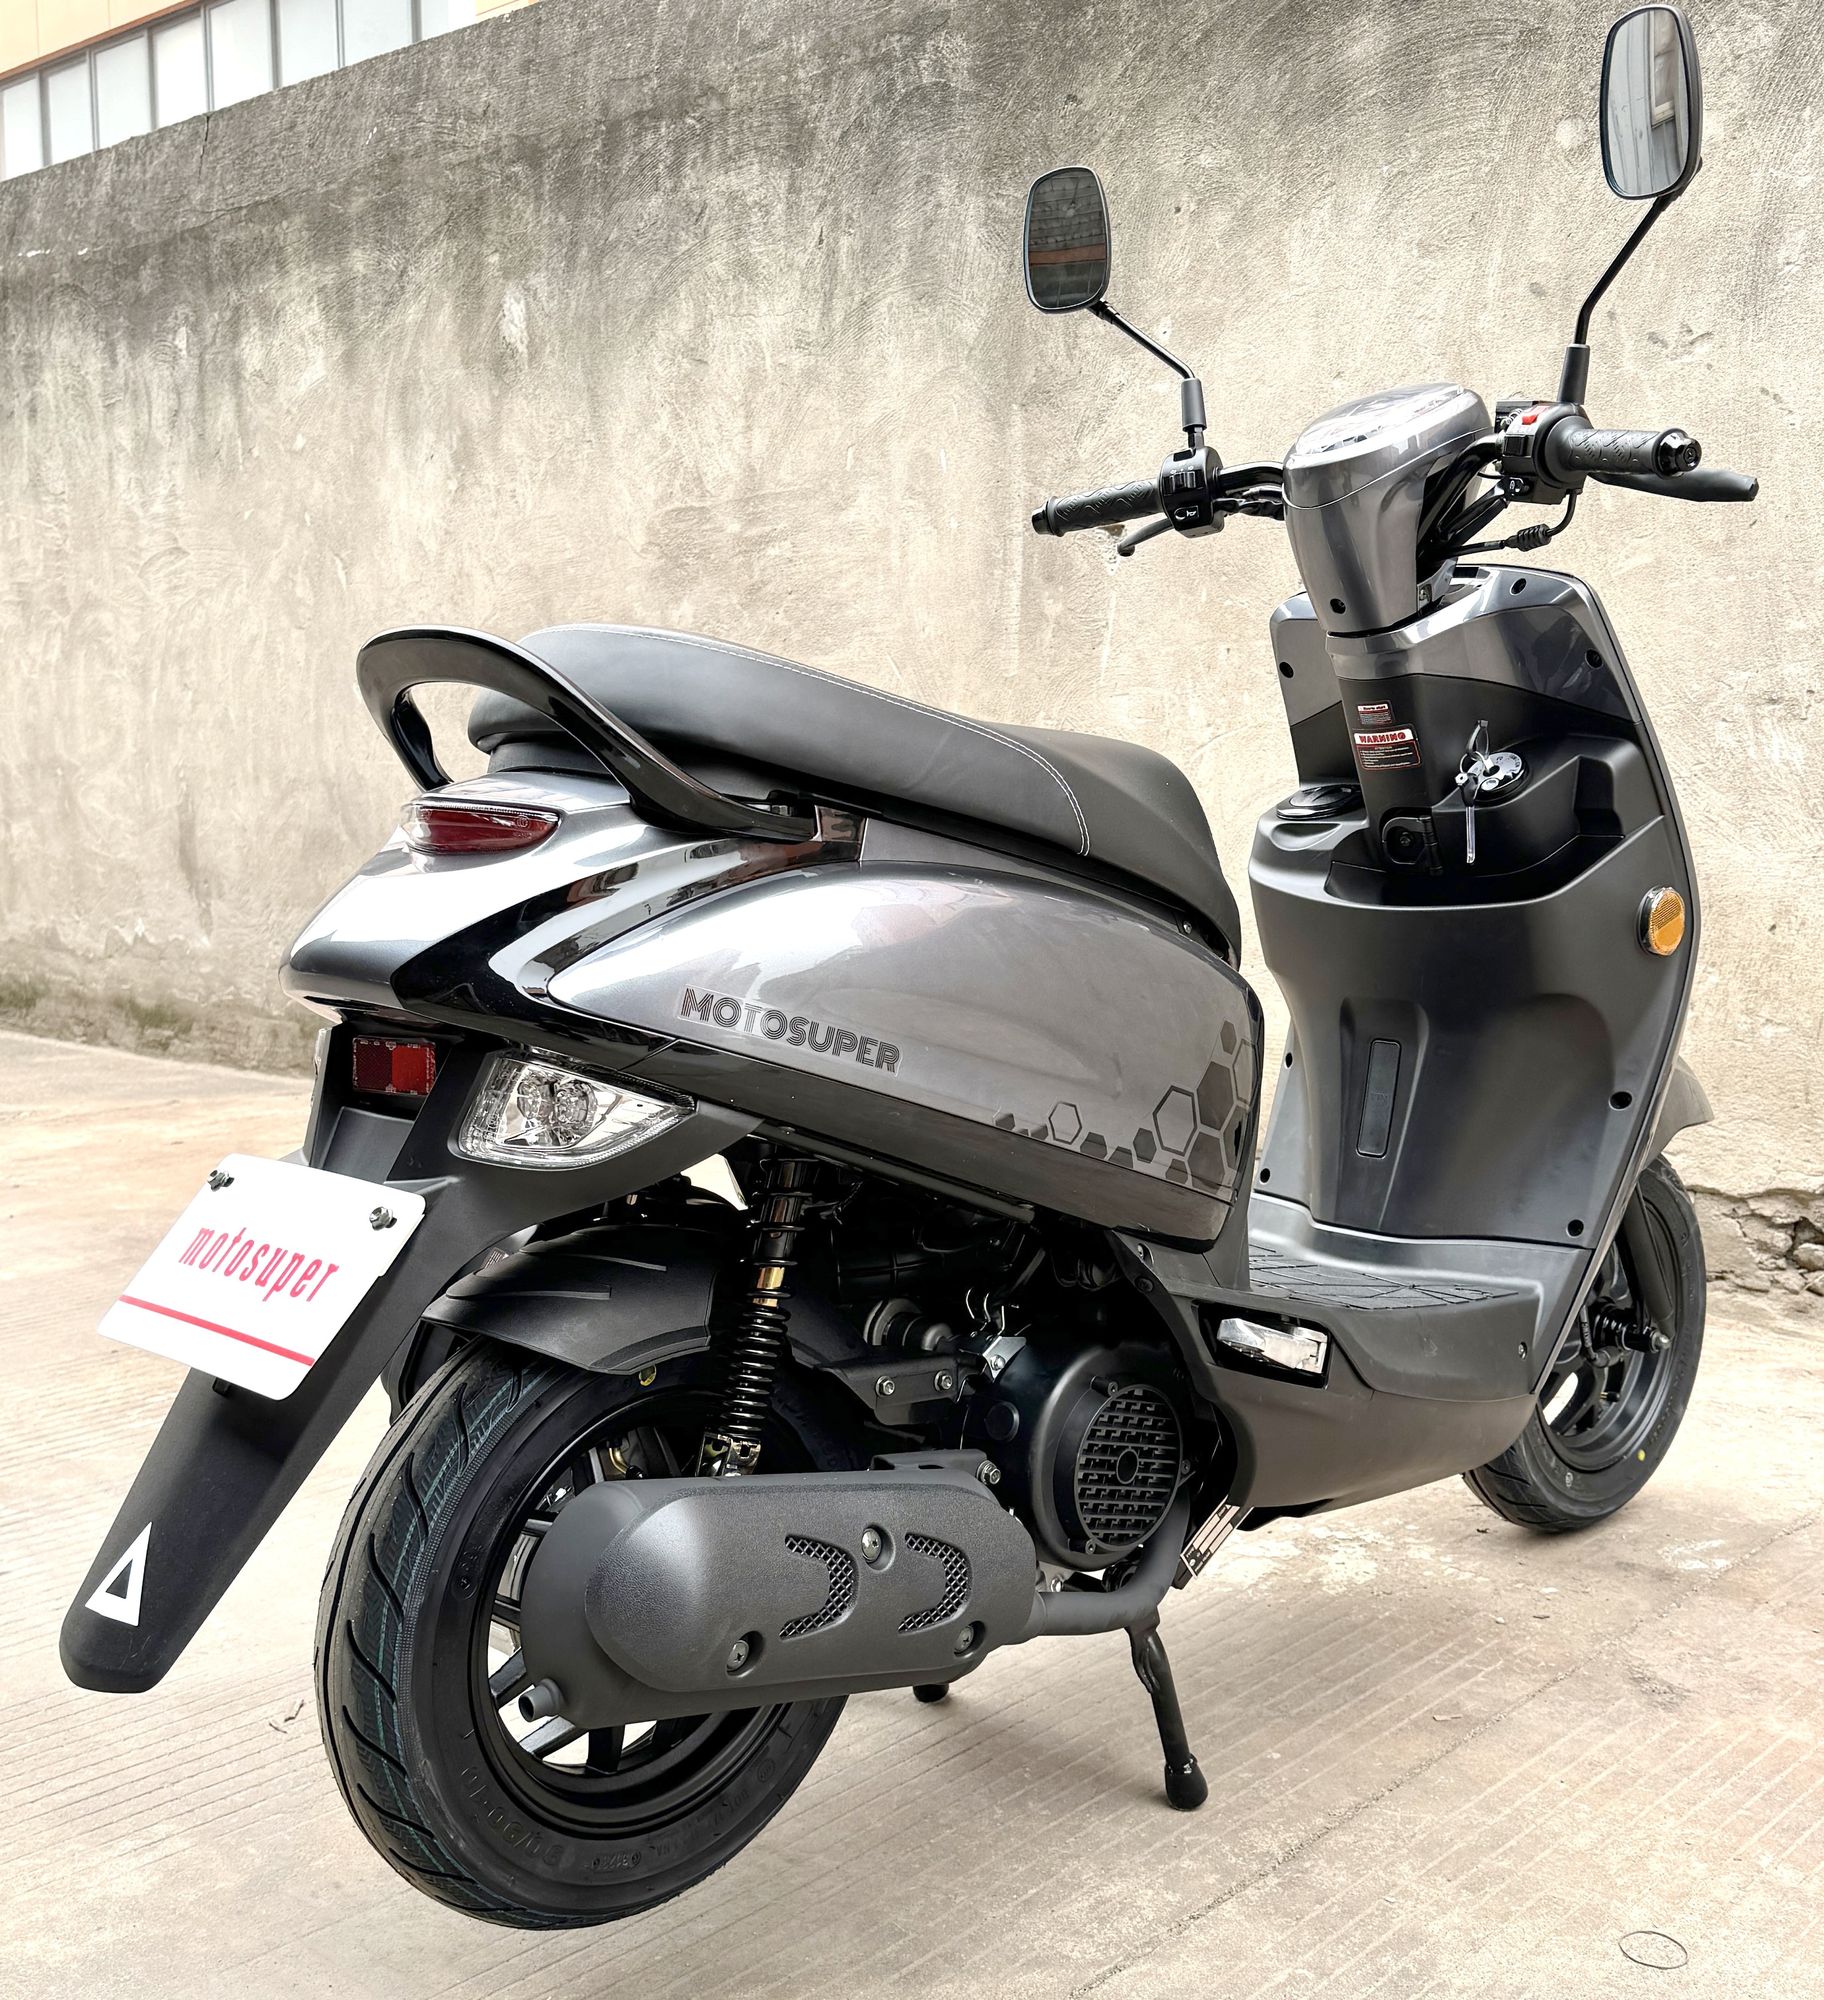 Скутер Motosuper S9 Noir Gris (серый)